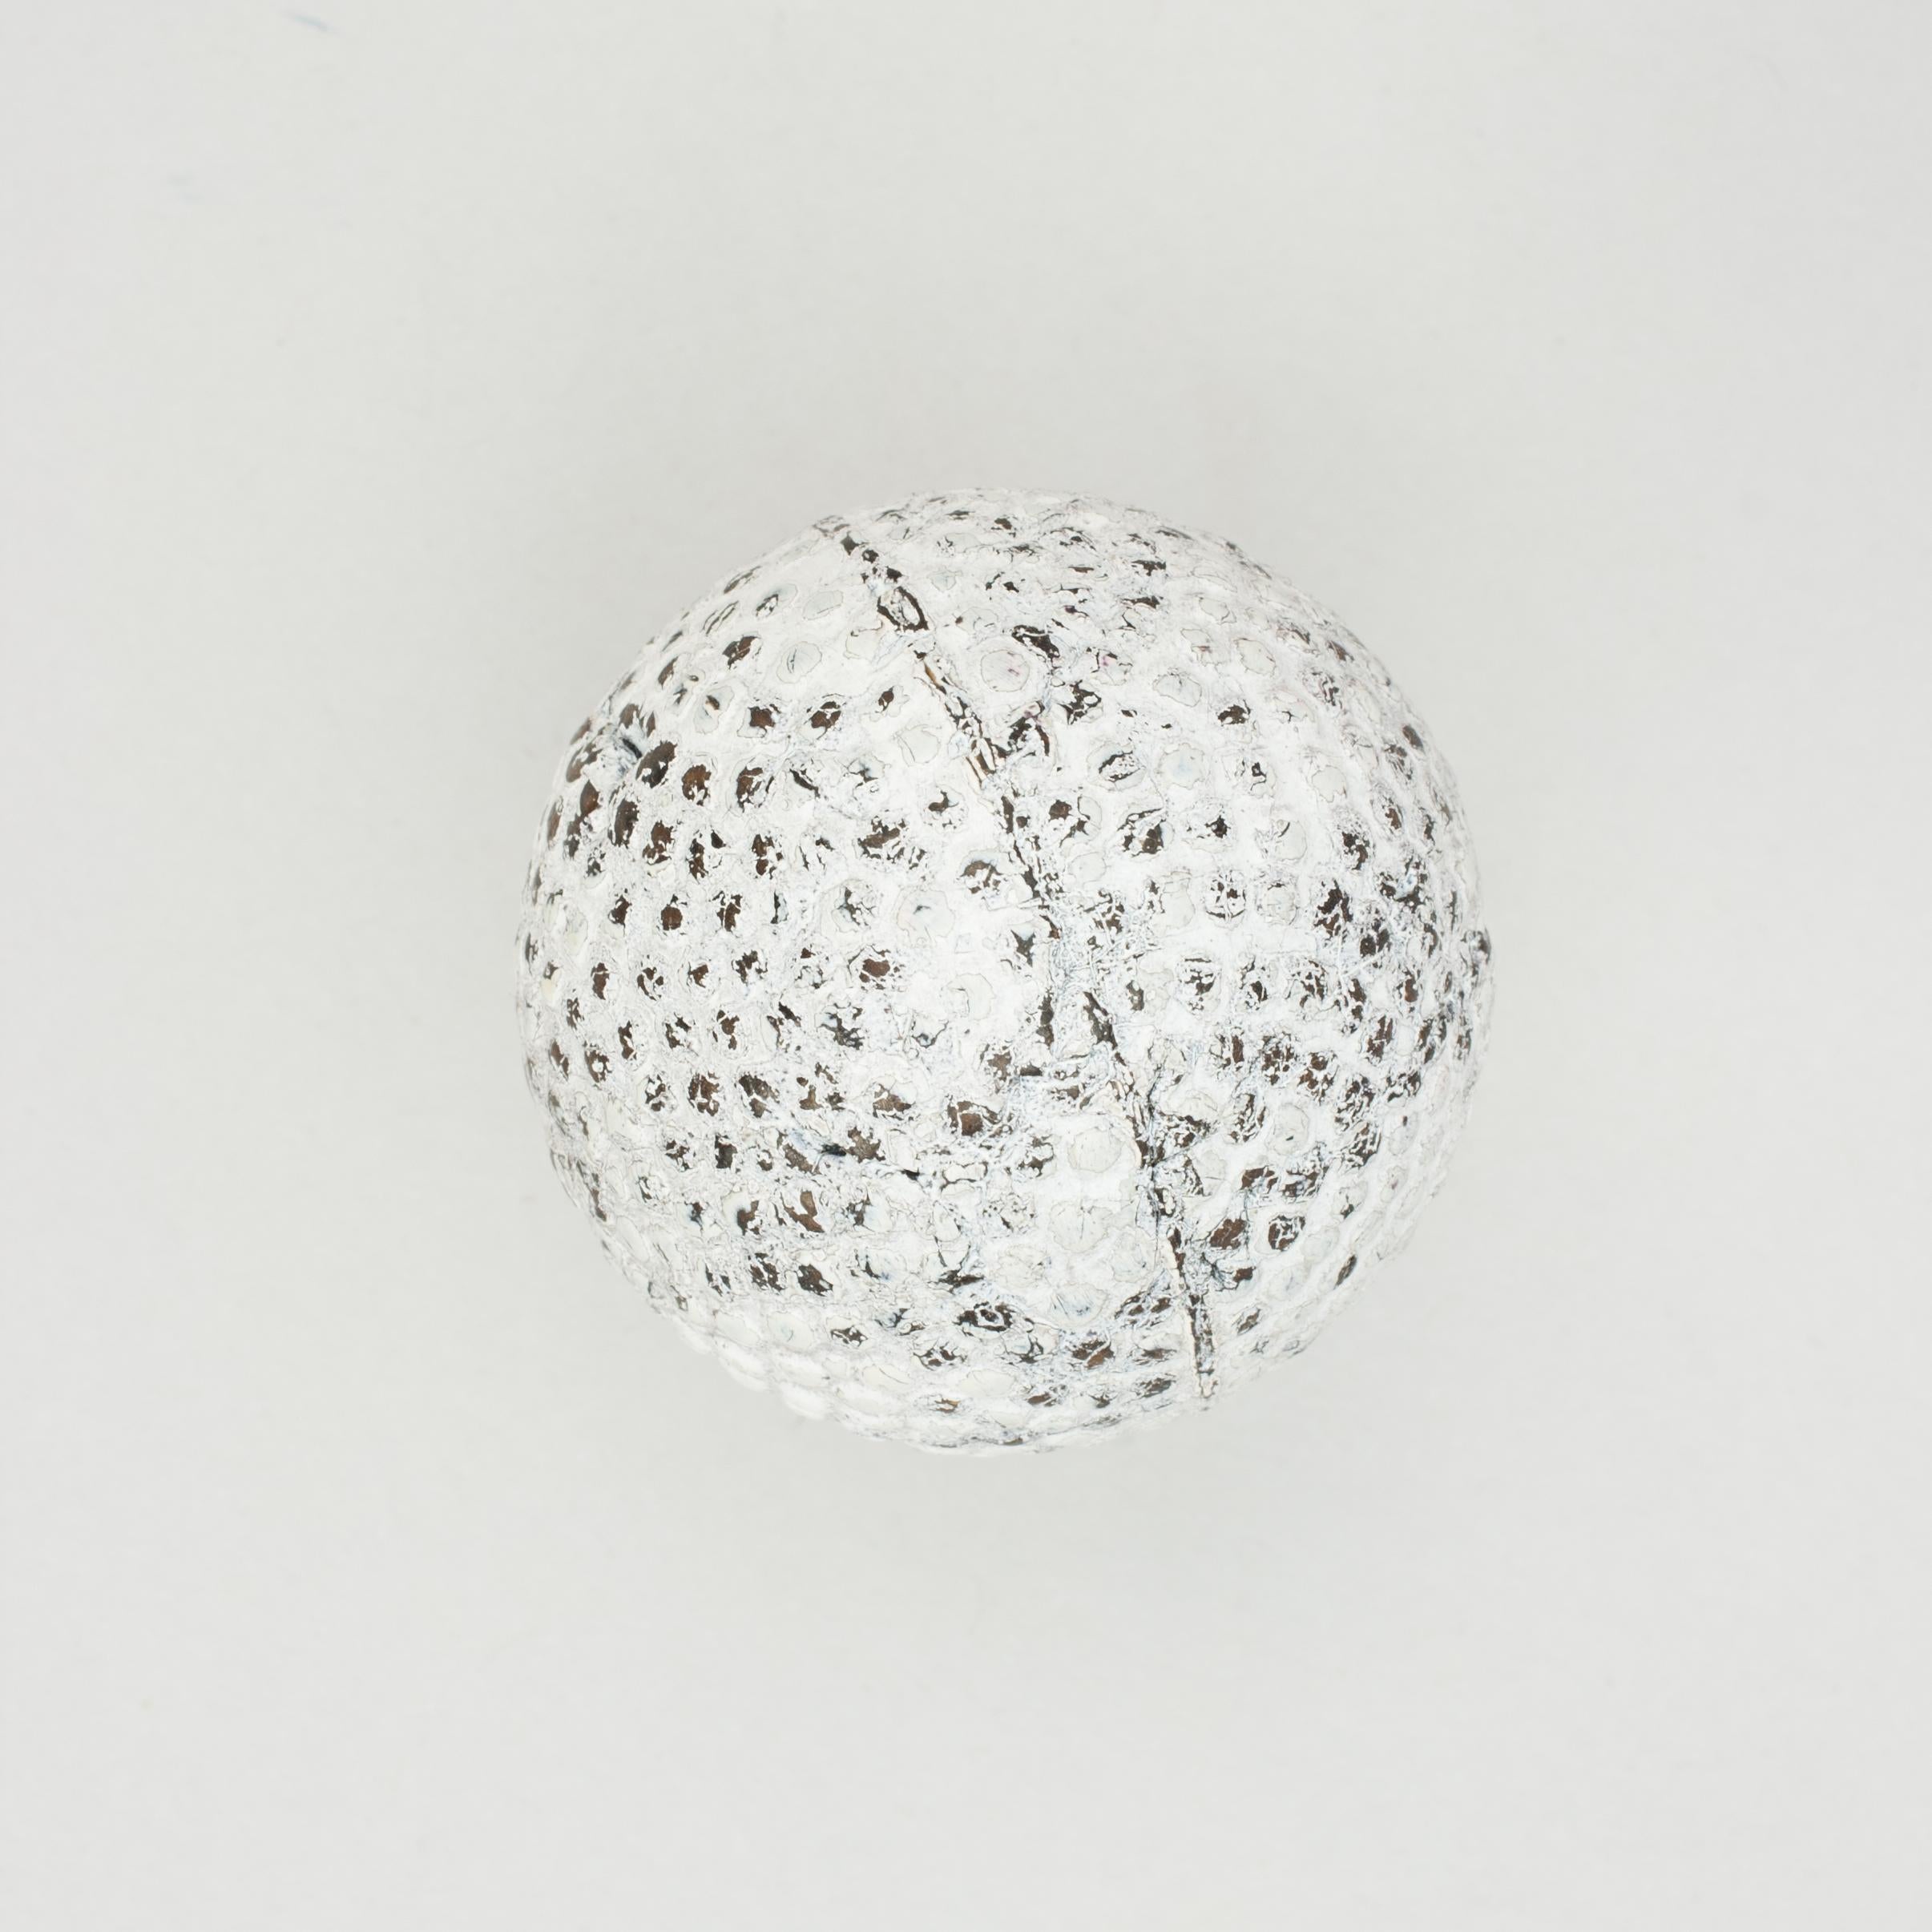 Sporting Art Antique Golf Ball, ;Jenny', Bramble Pattern Rubber Core, circa 1910